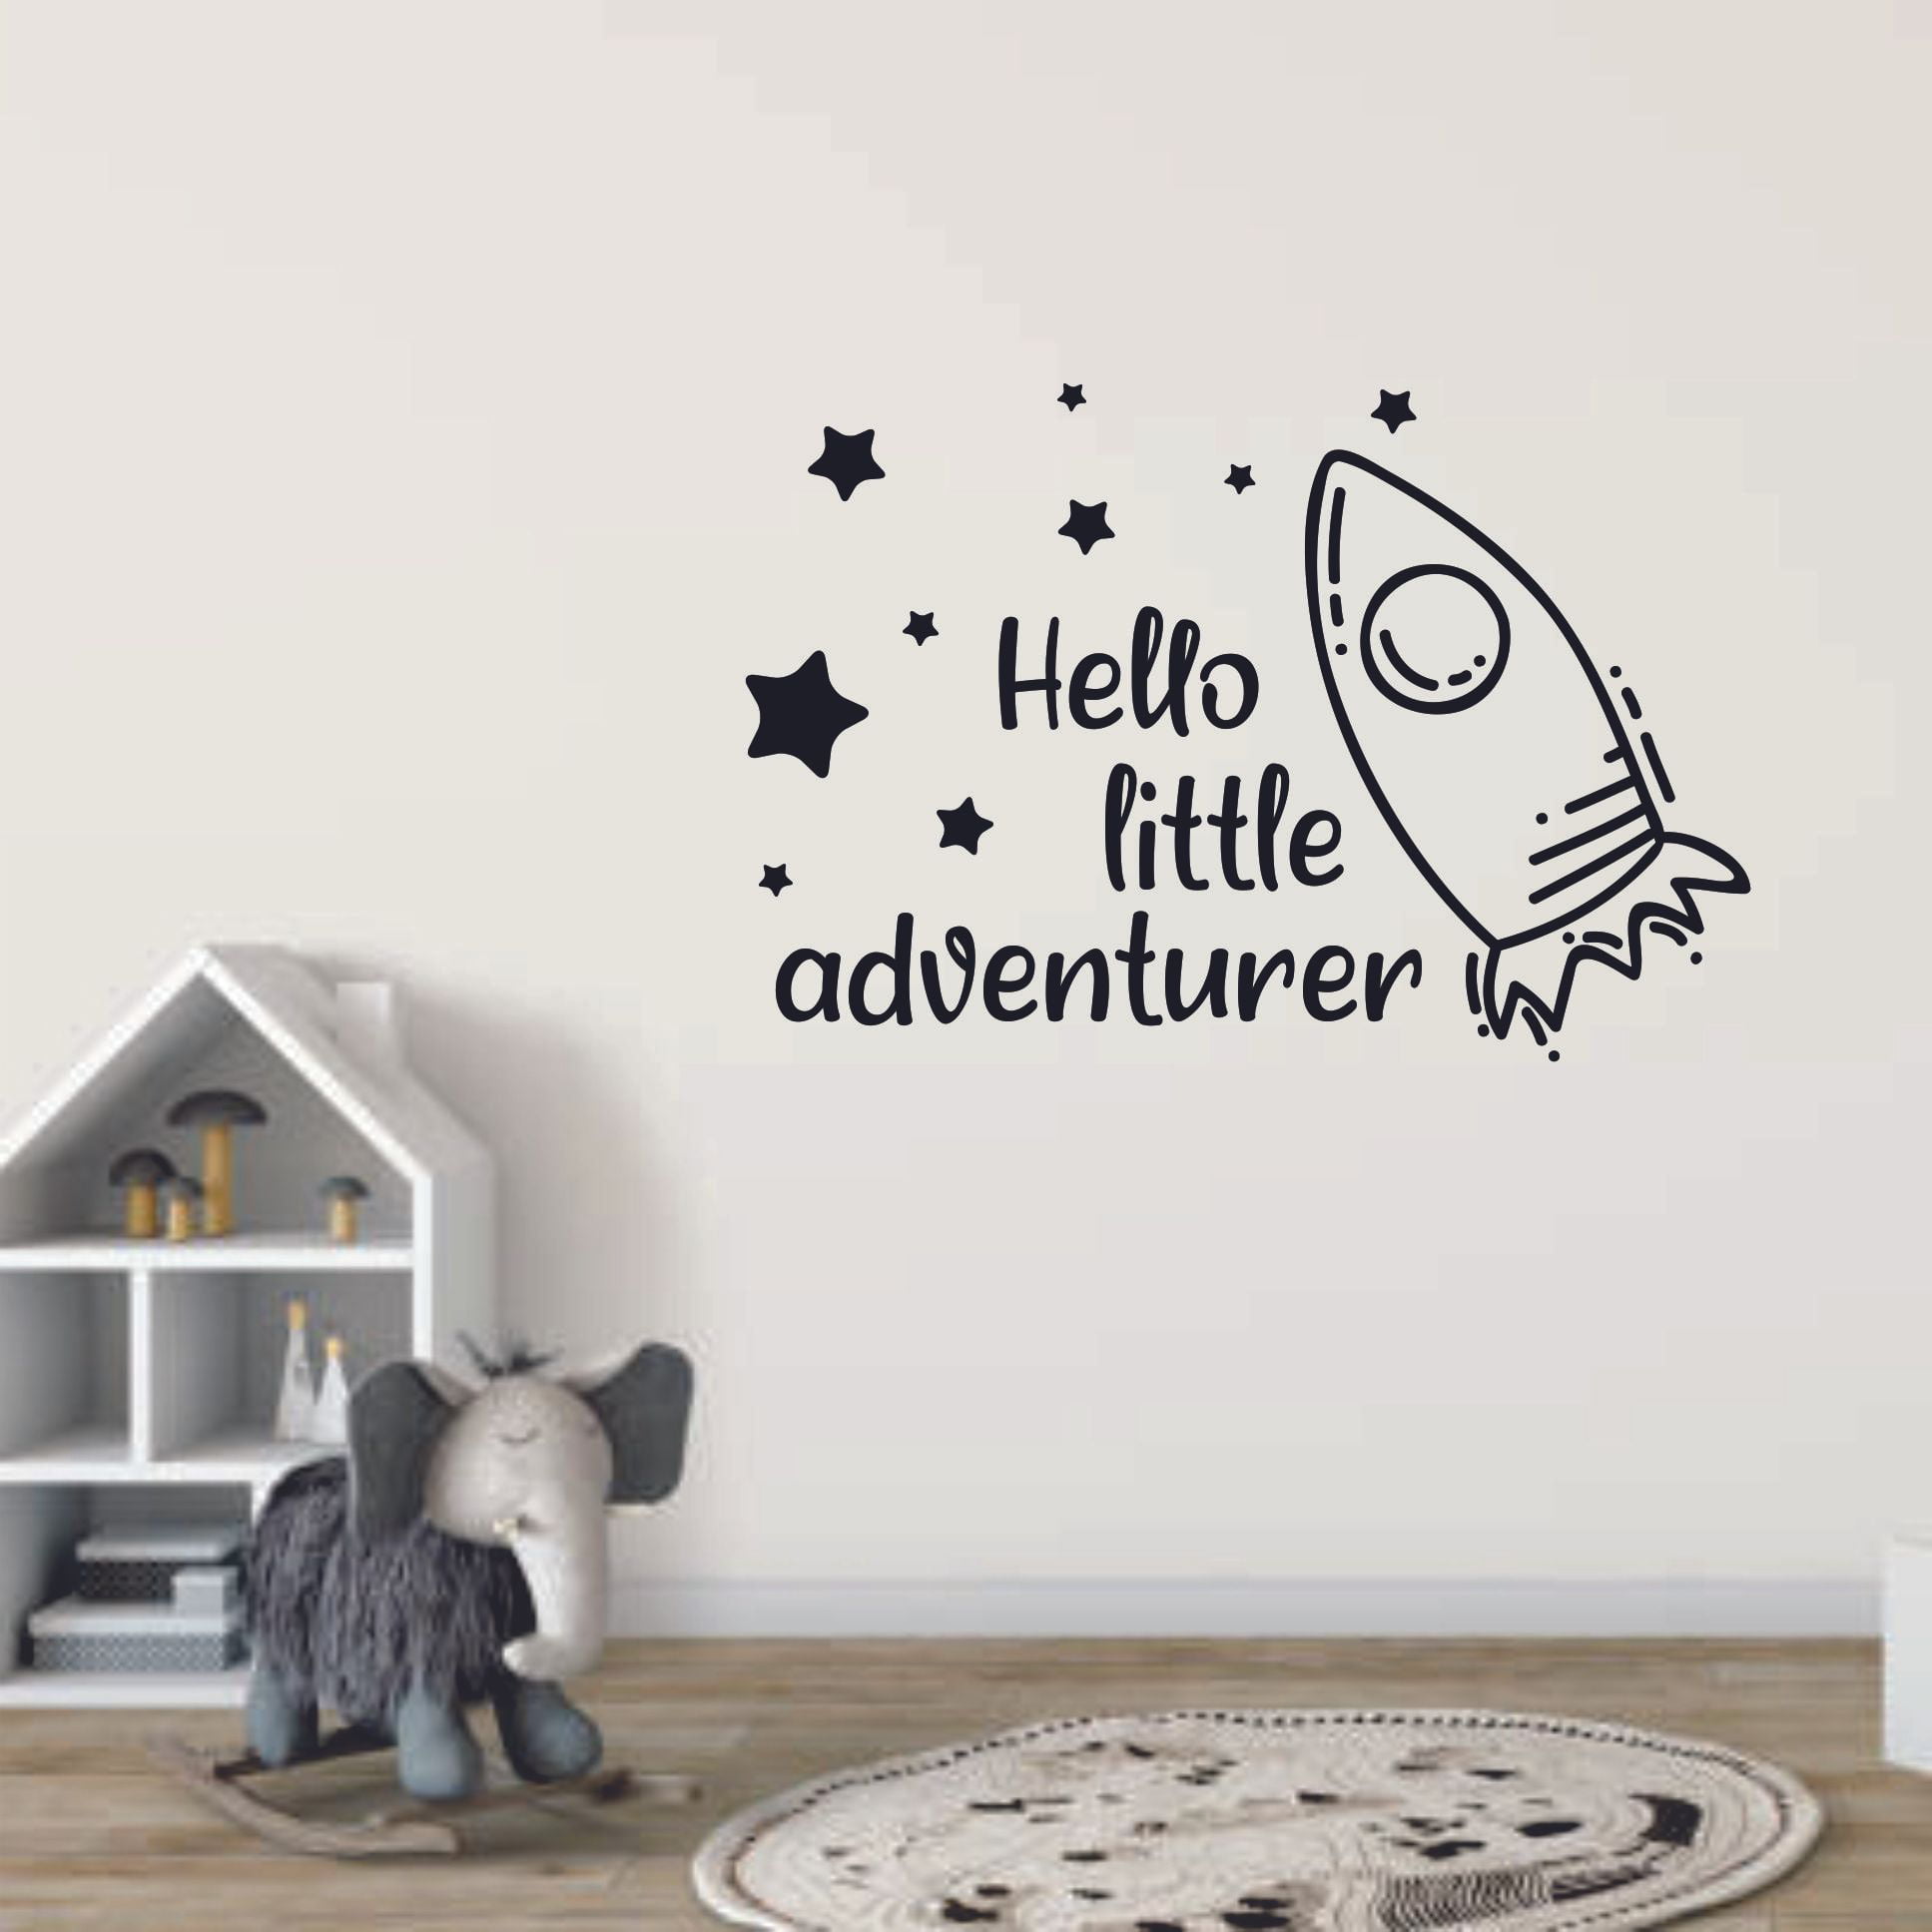 Little Adventurer Home Wall Decal Sticker For Kids Room Baby Vinyl wall sticker 